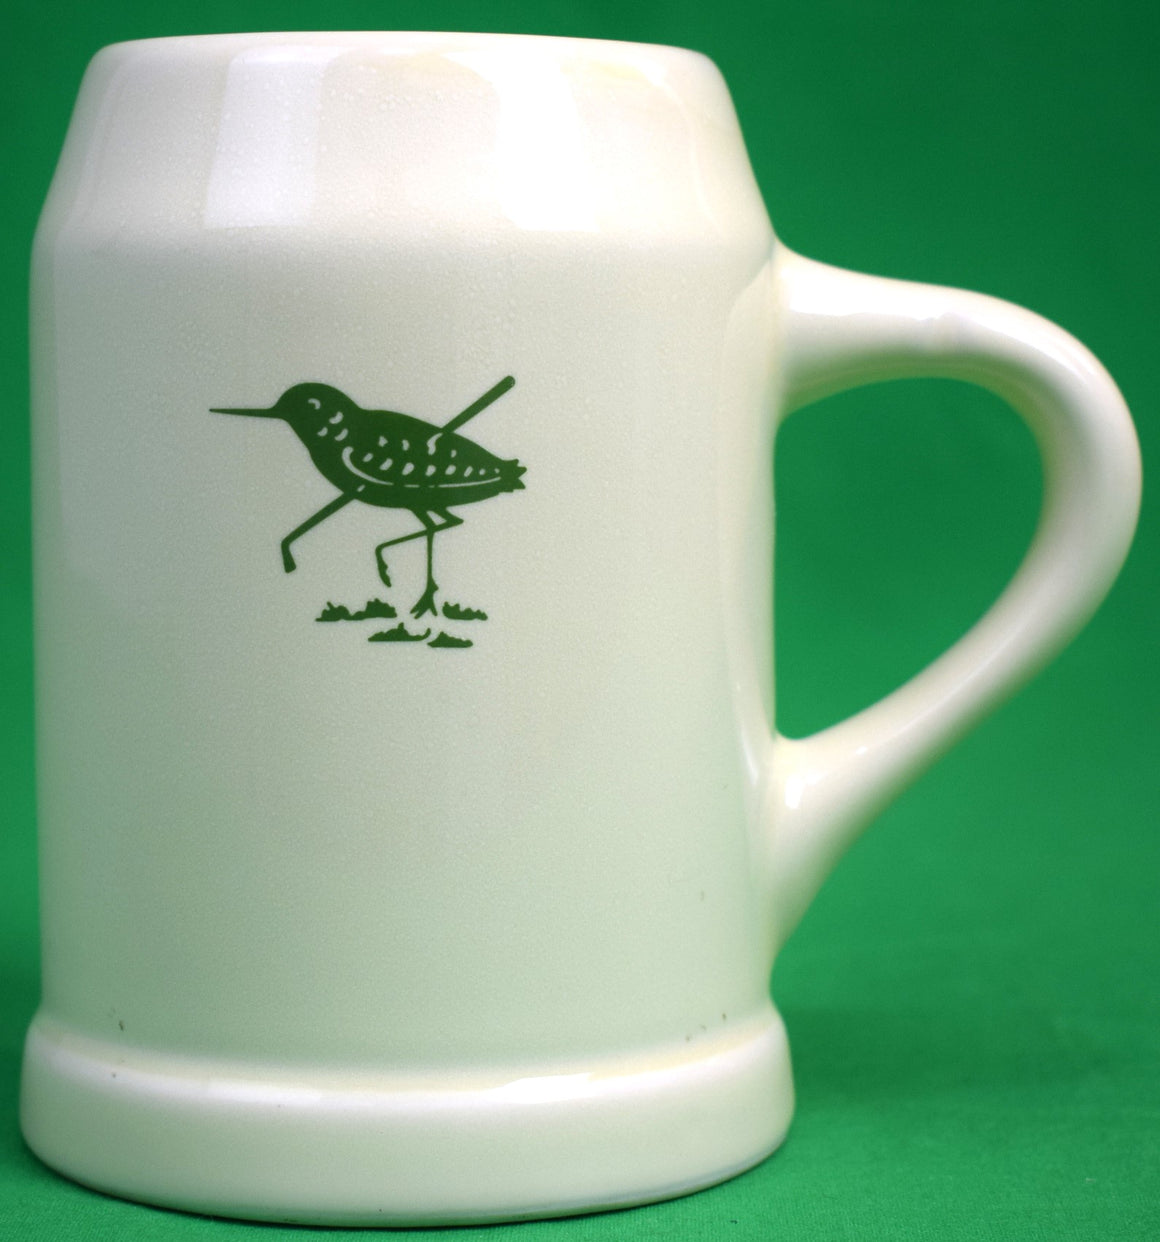 "The Creek Club Locust Valley x c 1950s Hall Ceramic Mug"